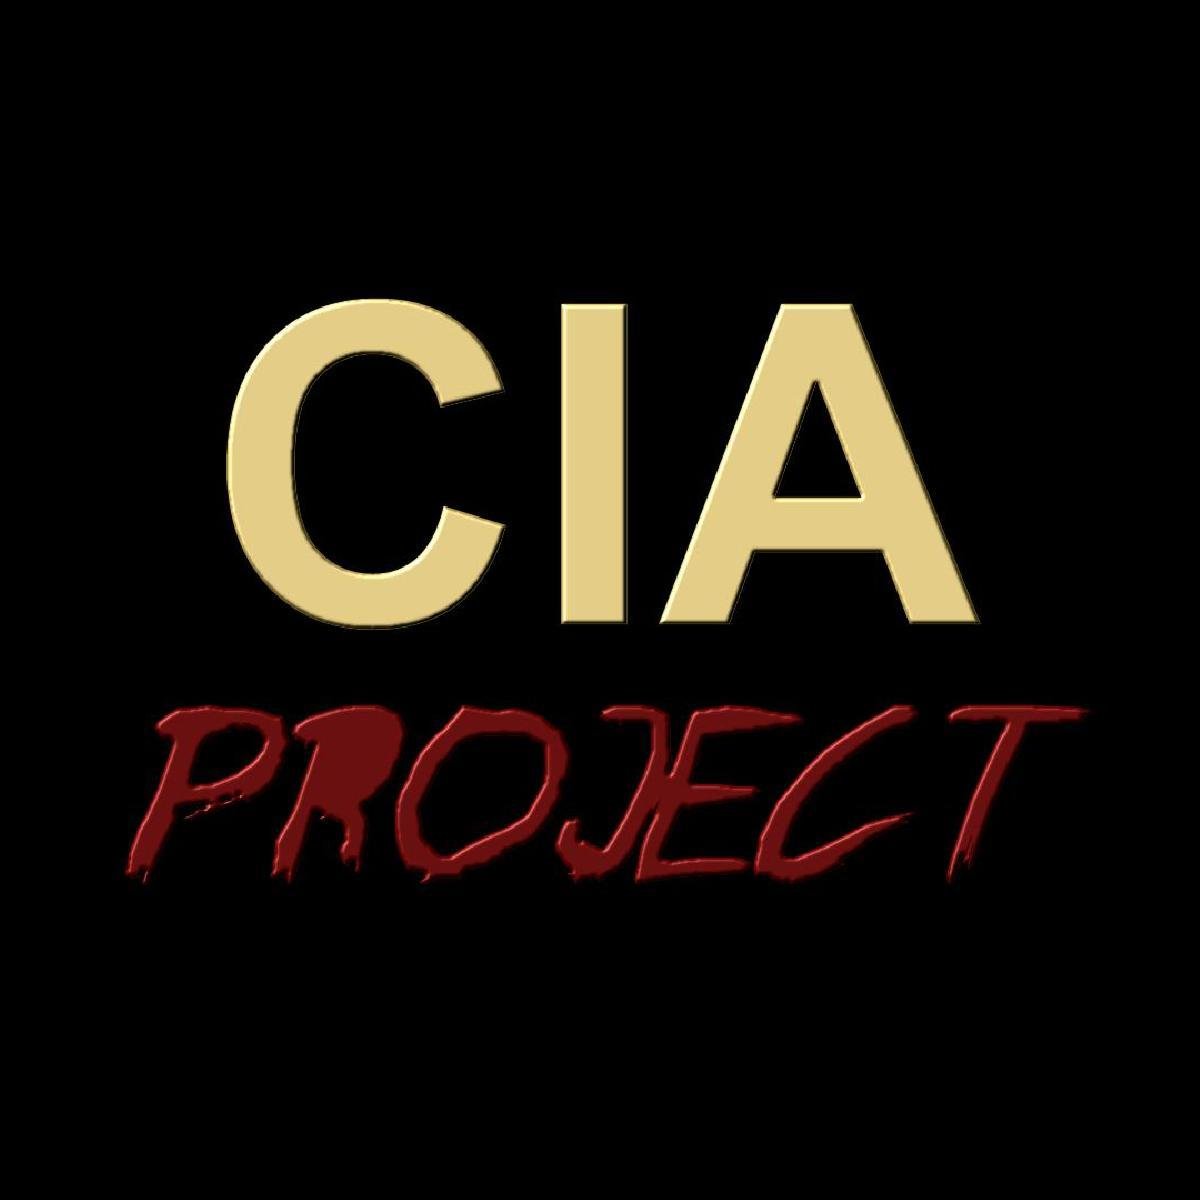 CIA PROJECT NEWS Bitcoin NSA CIA KGB MOSSAD FBI Tracking the spooks